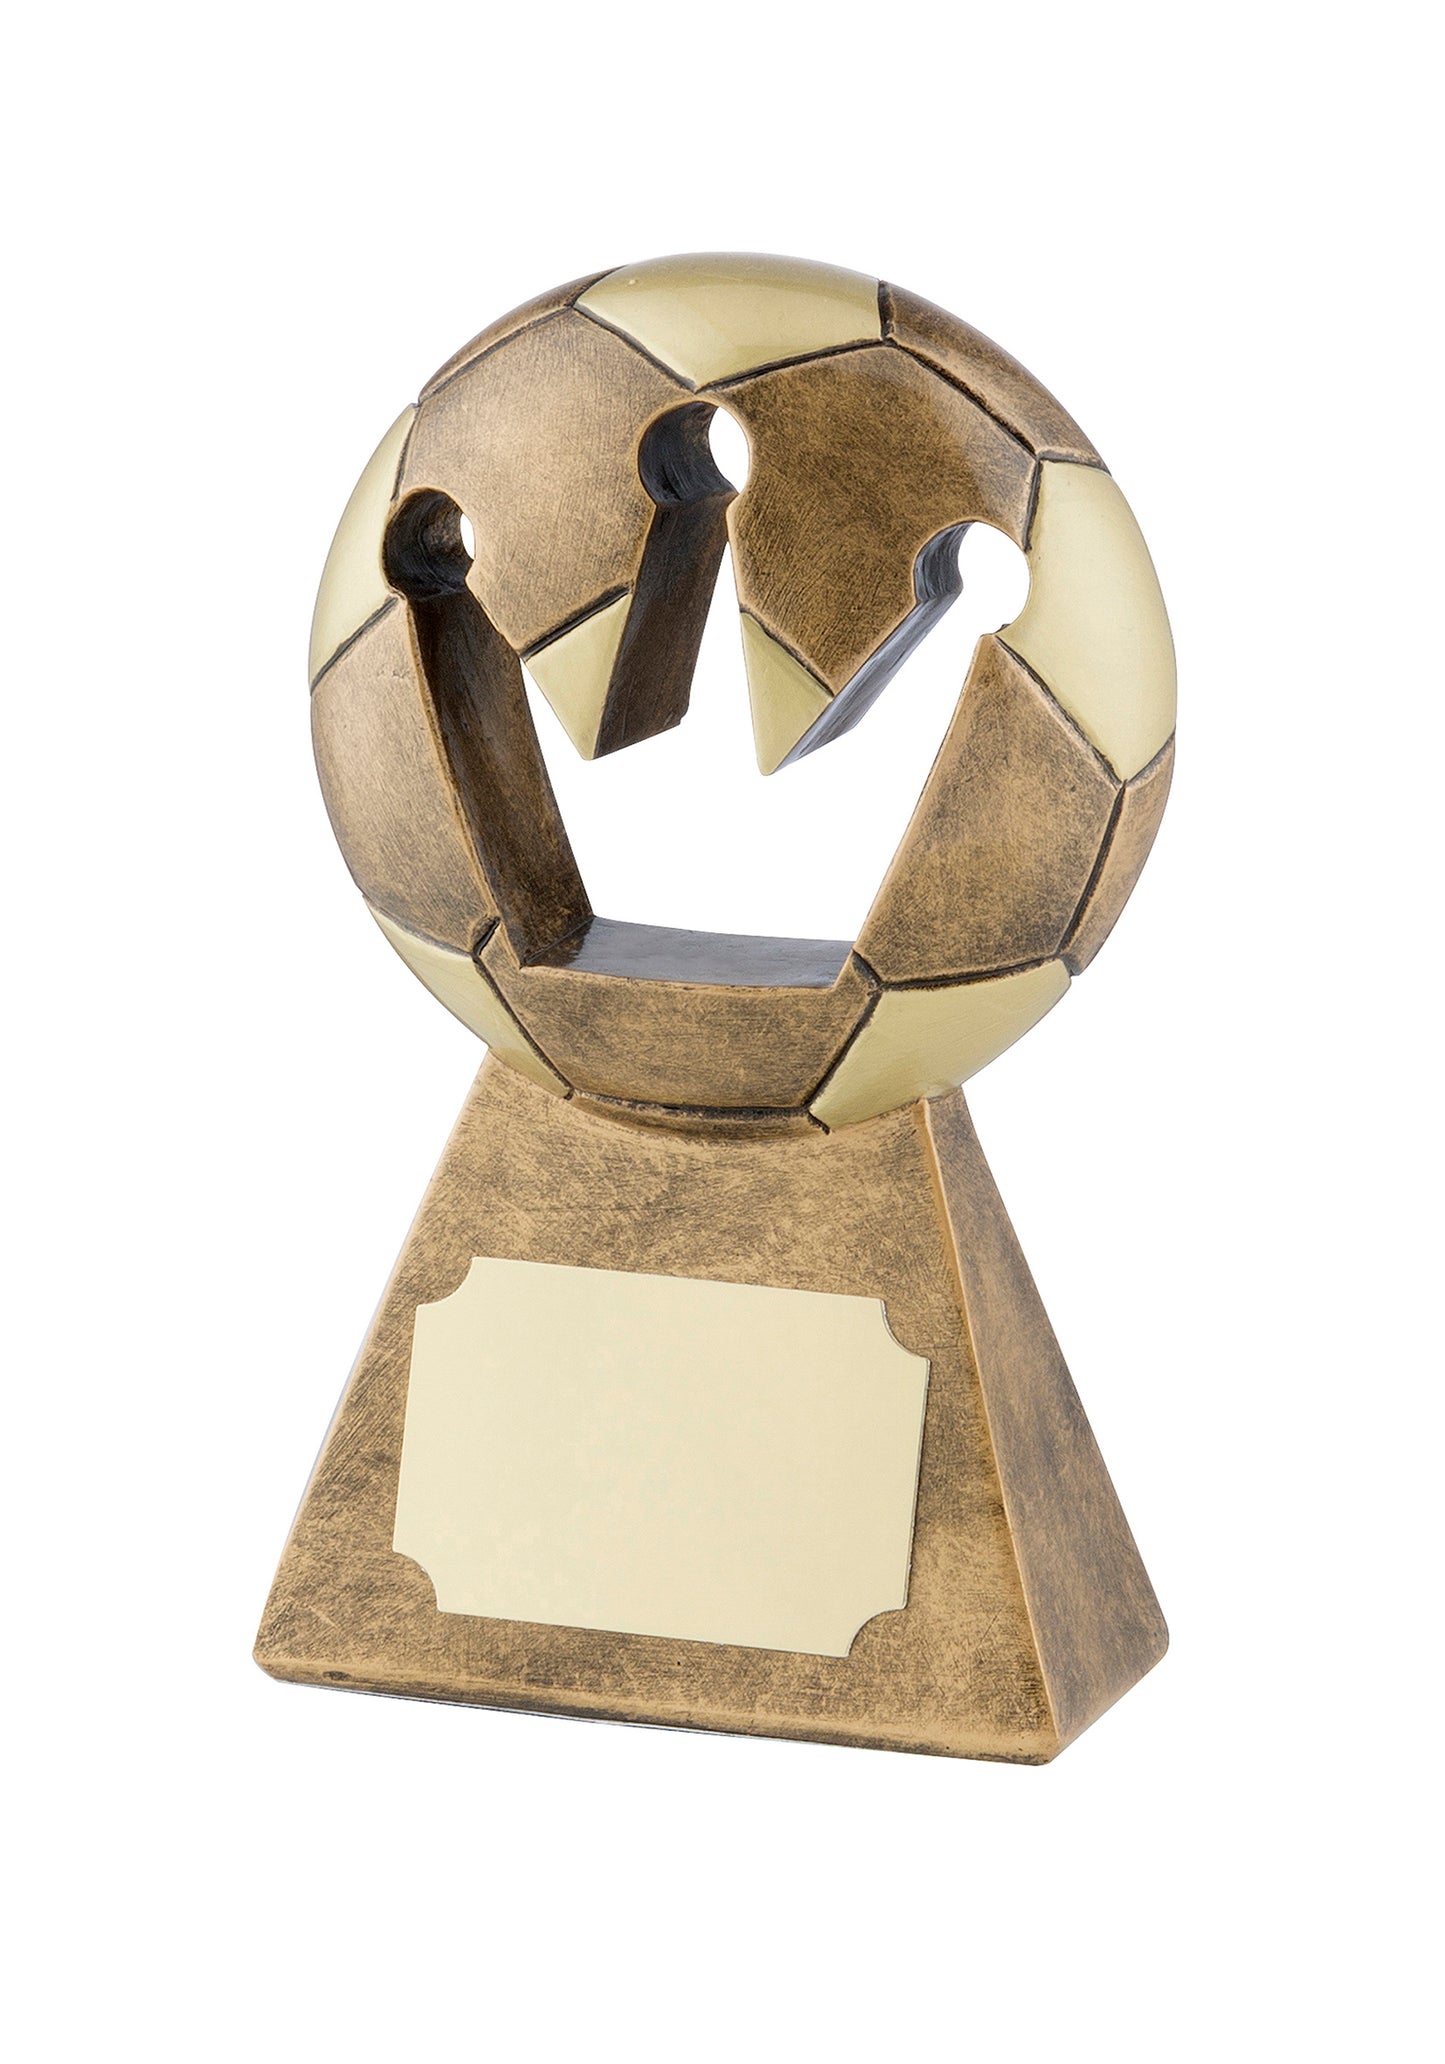 MB 13cm Football Award